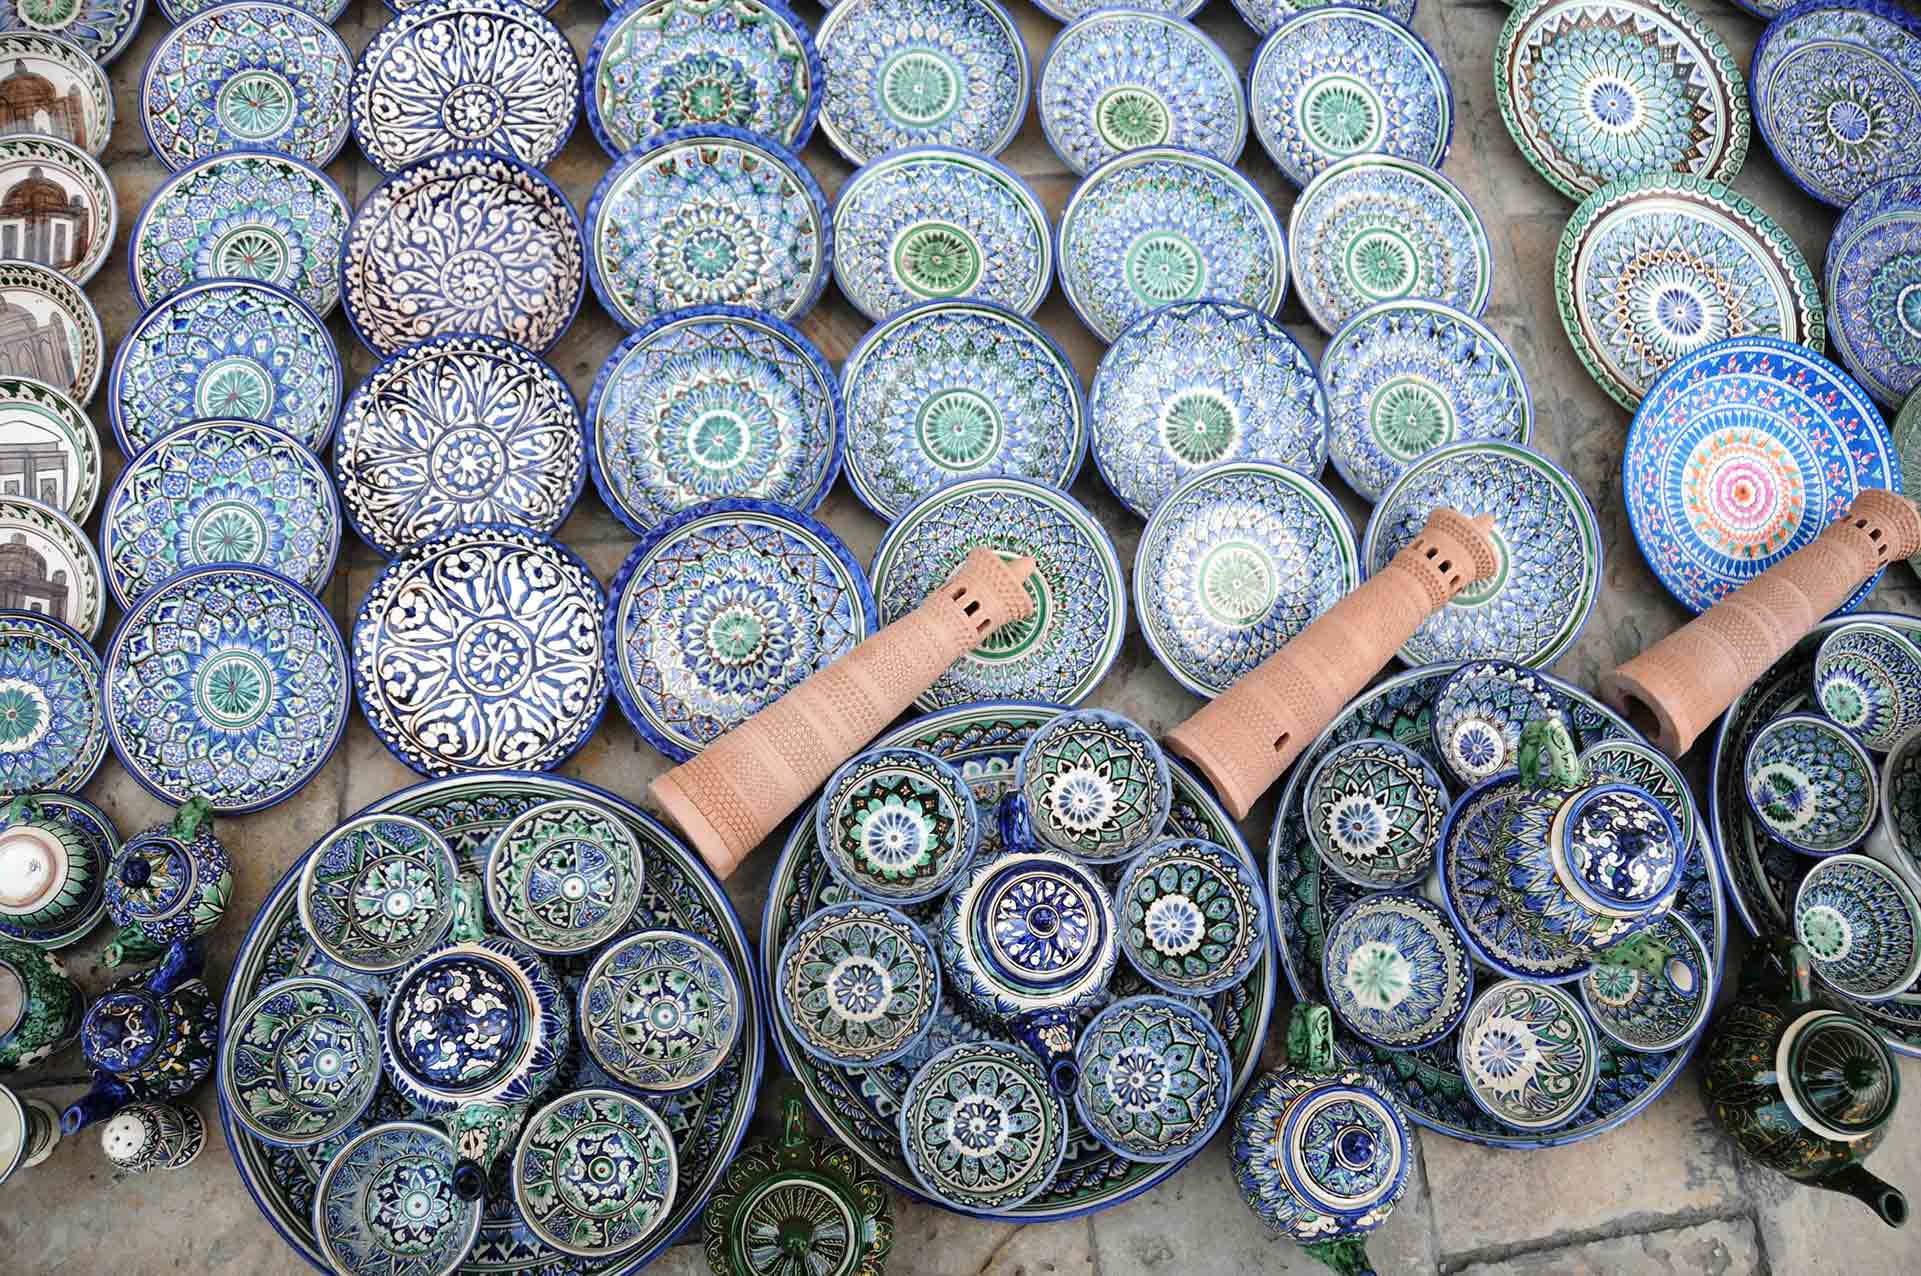 Decorative ceramic plates with traditional uzbekistan ornament on street market of Uzbekistan